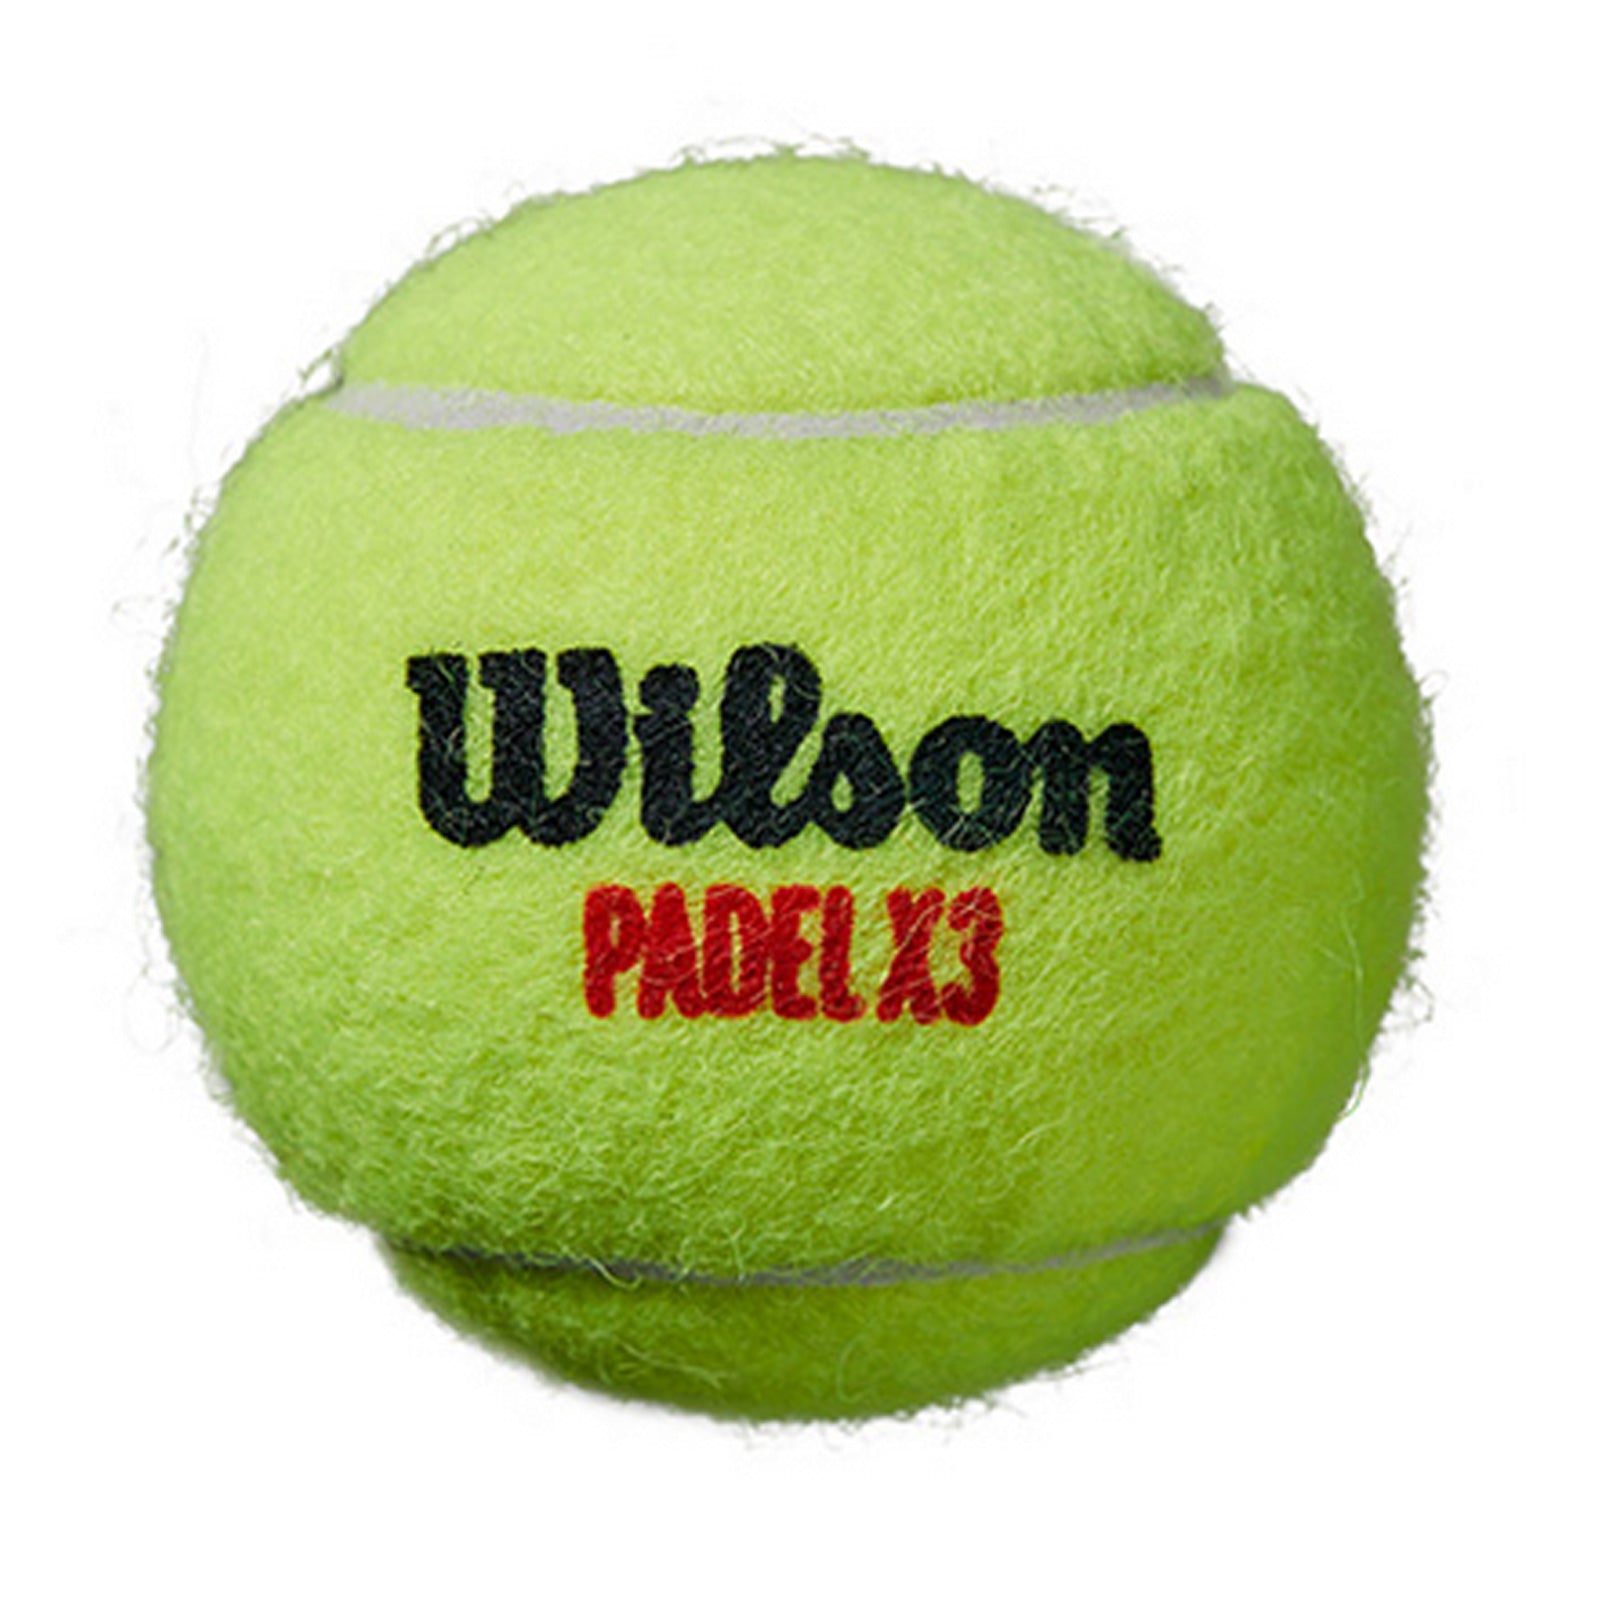 Wilson X3 Performance Padel Balls